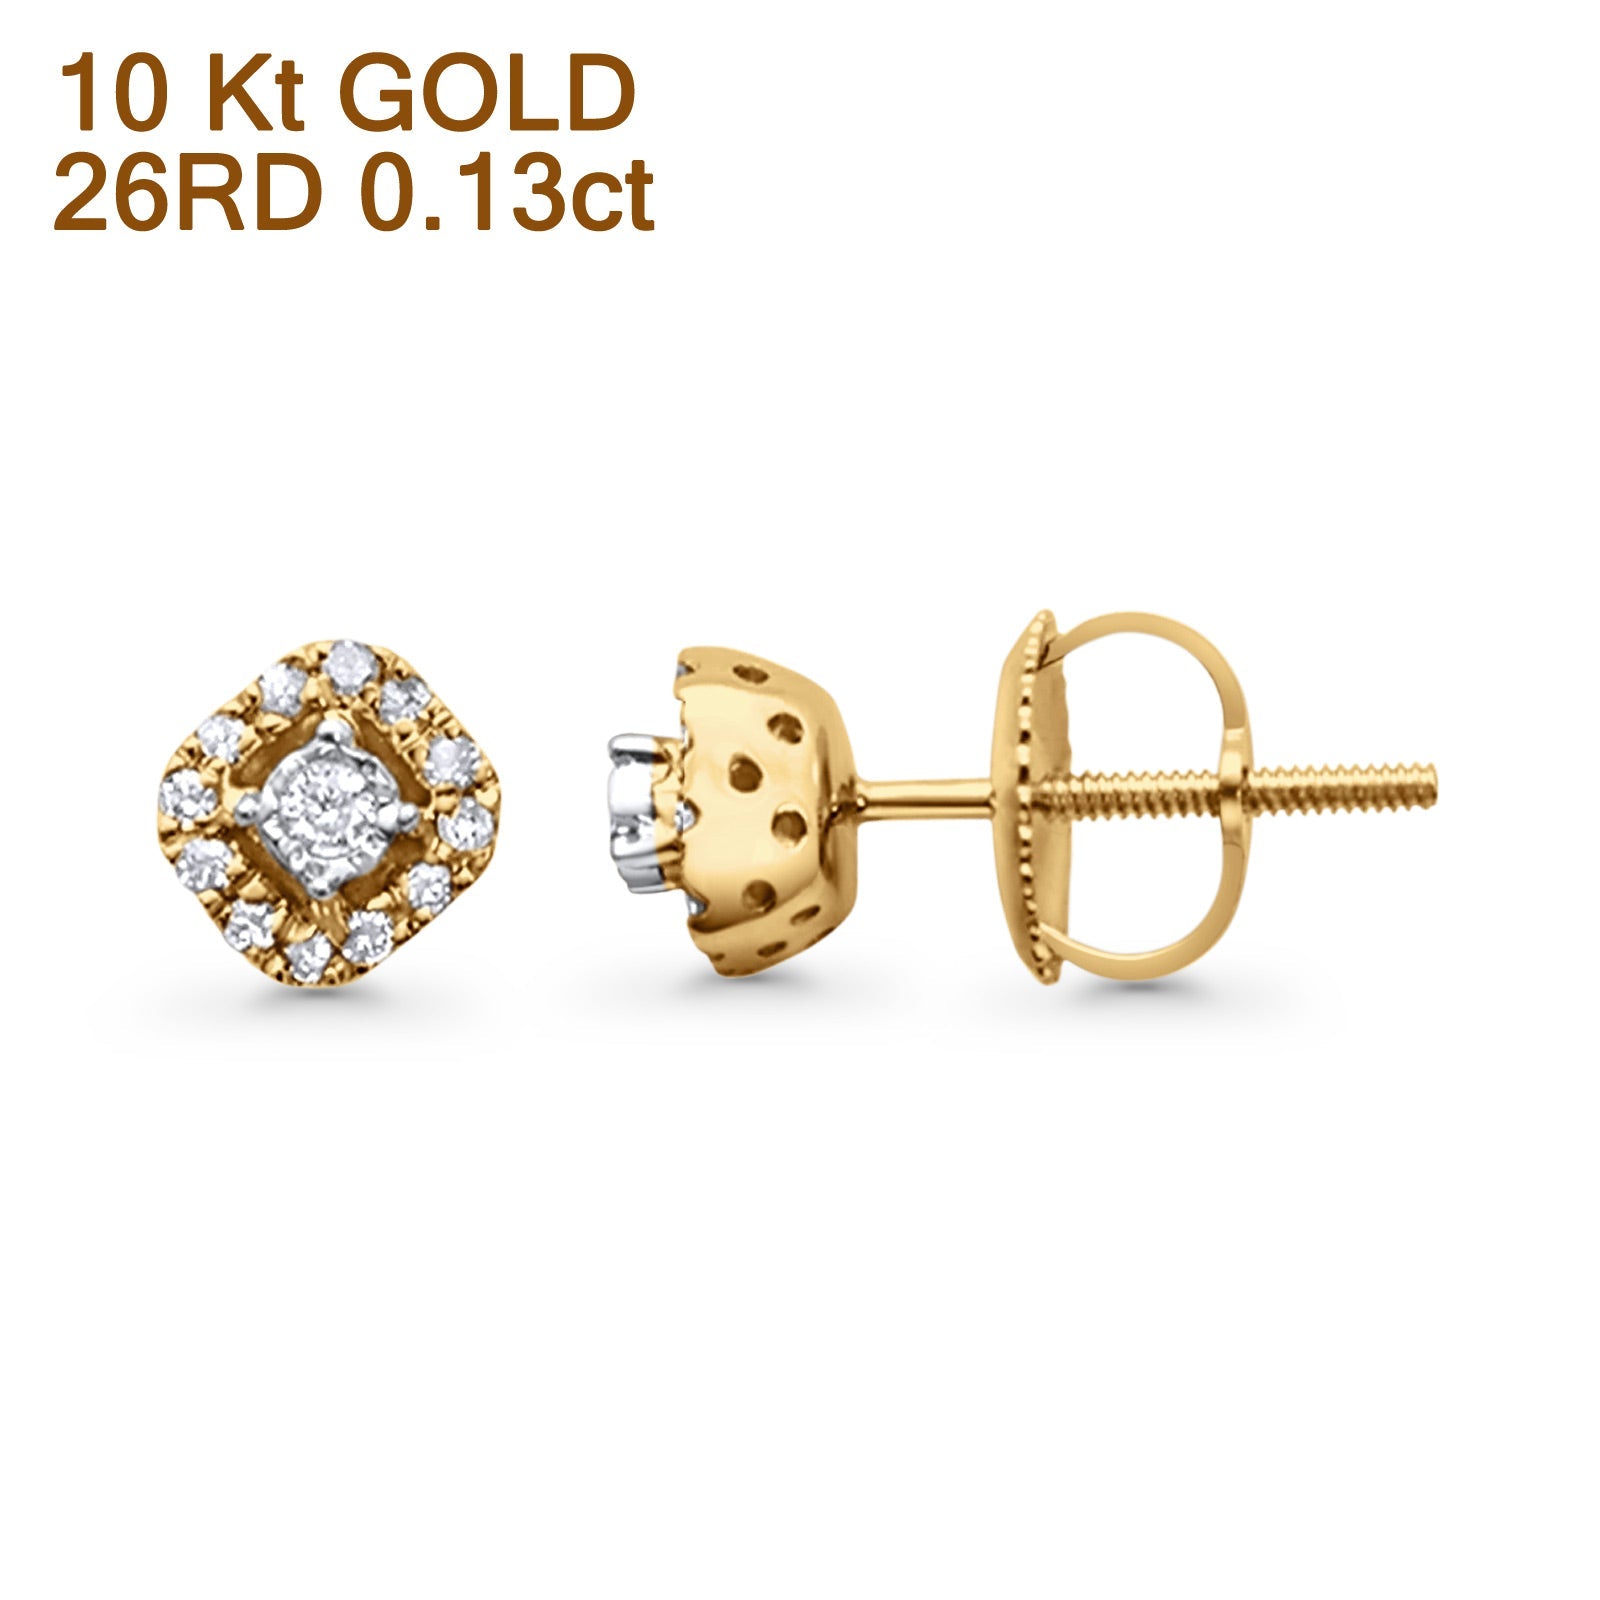 Solid 10K Gold 5.5mm Halo Fashion Round Hip Hop Diamond Stud Earring